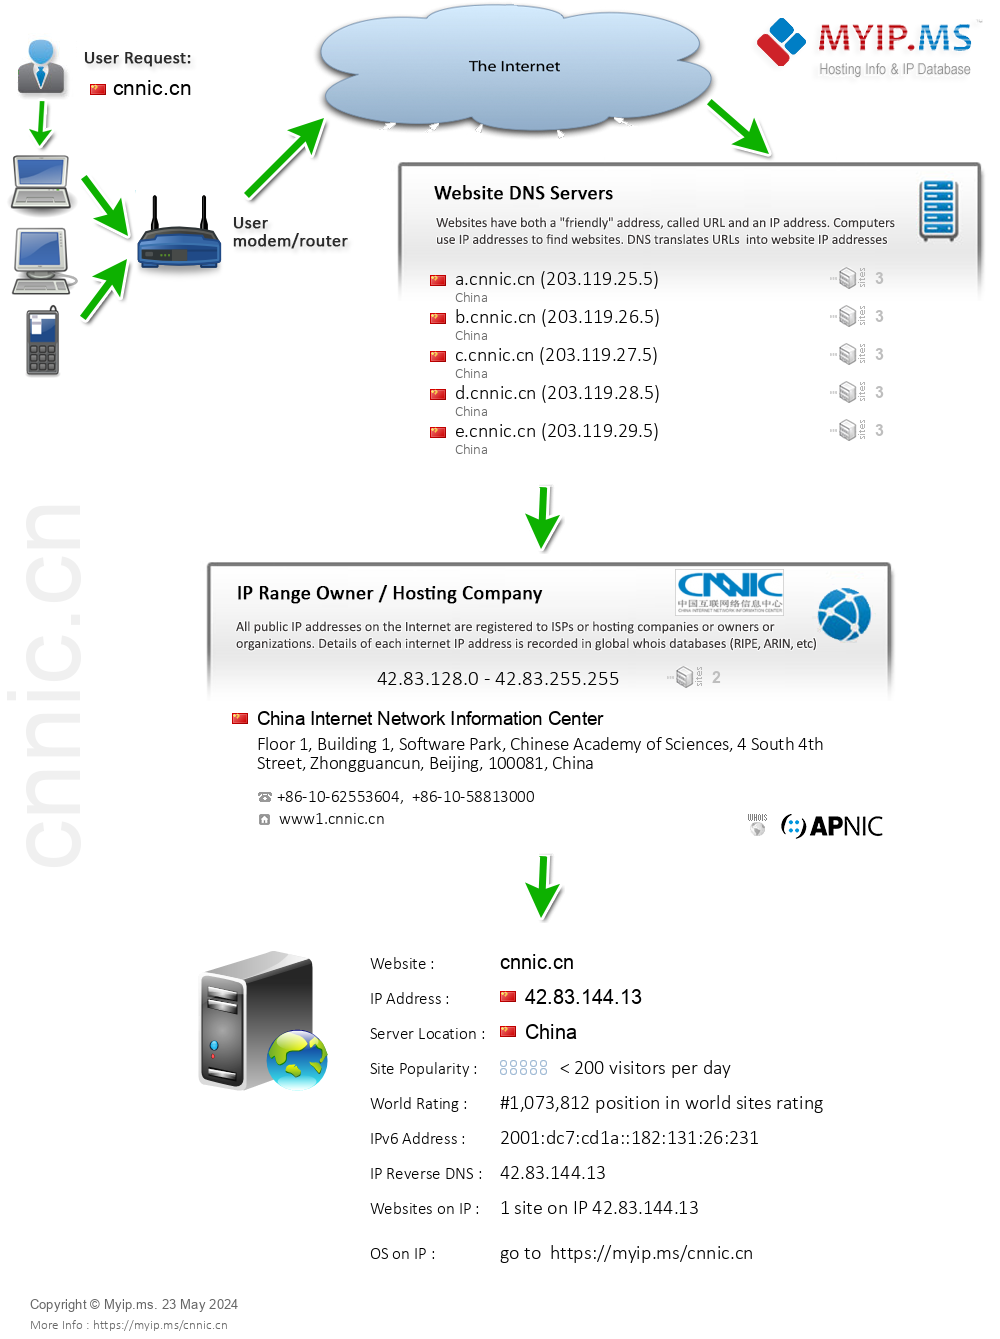 Cnnic.cn - Website Hosting Visual IP Diagram